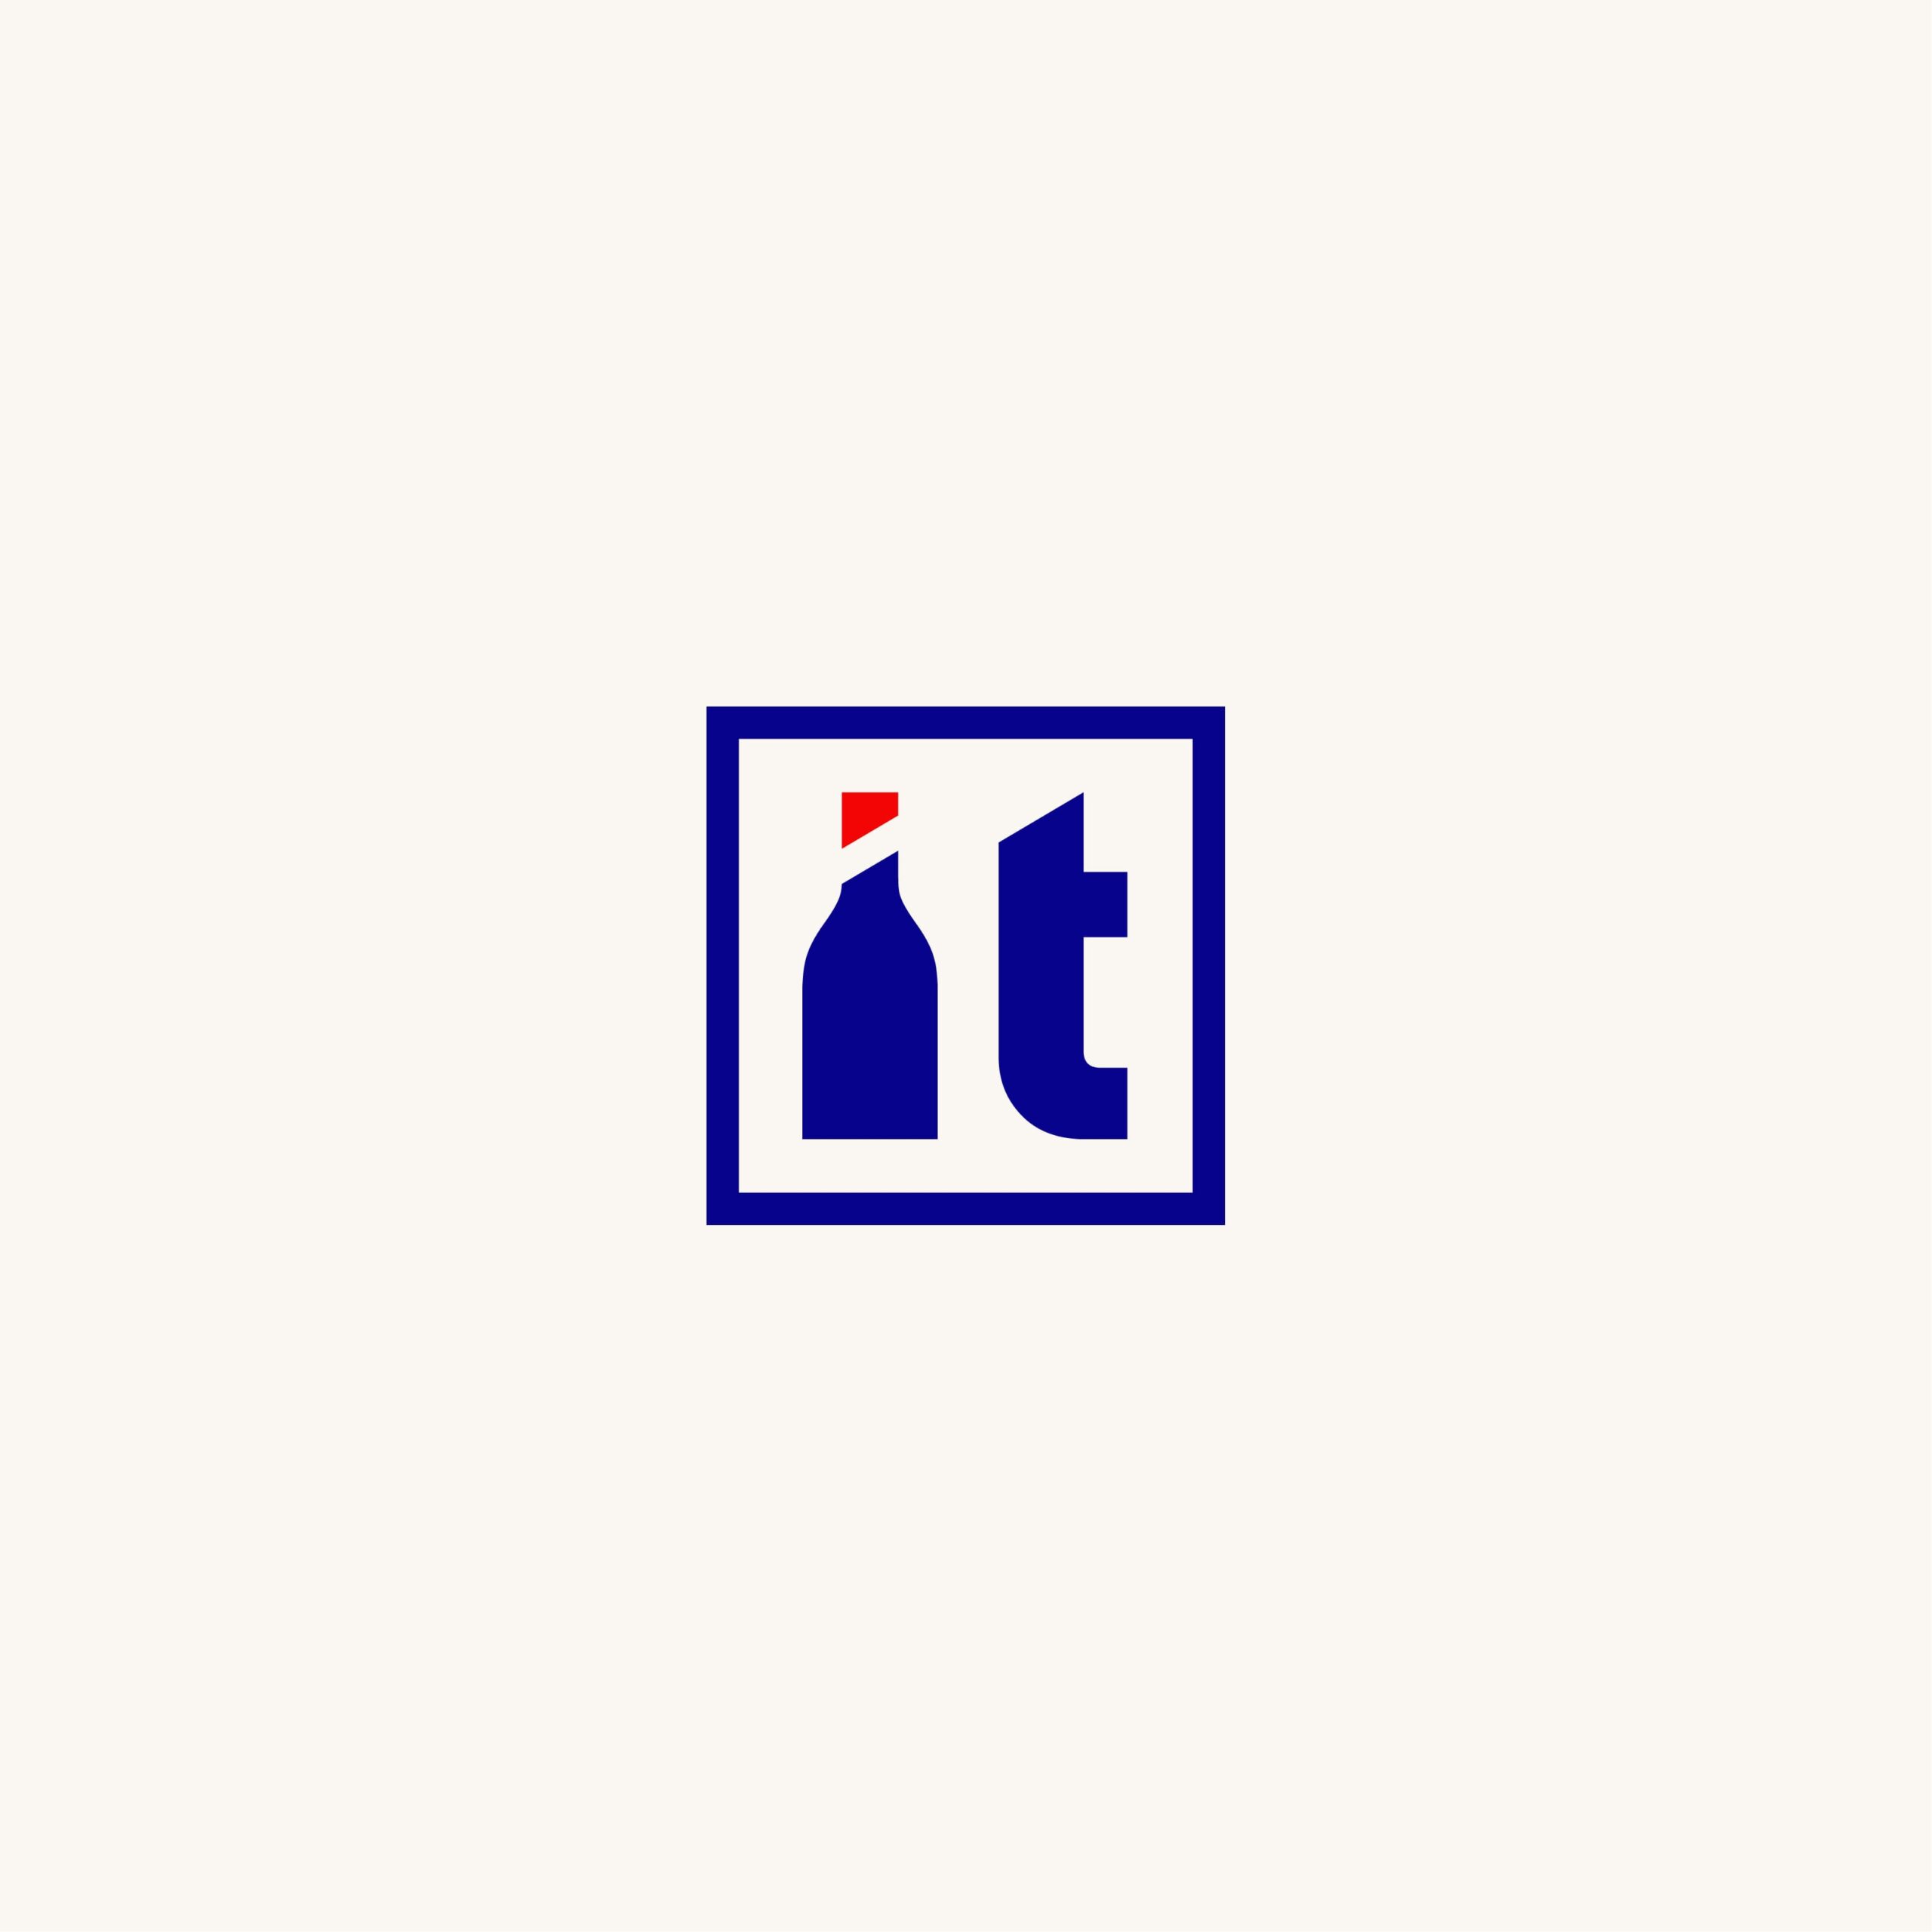 italializeme logo icon blue cream square@3x scaled - Bärenstark - Advertising Agency from Karlsruhe Mühlburg